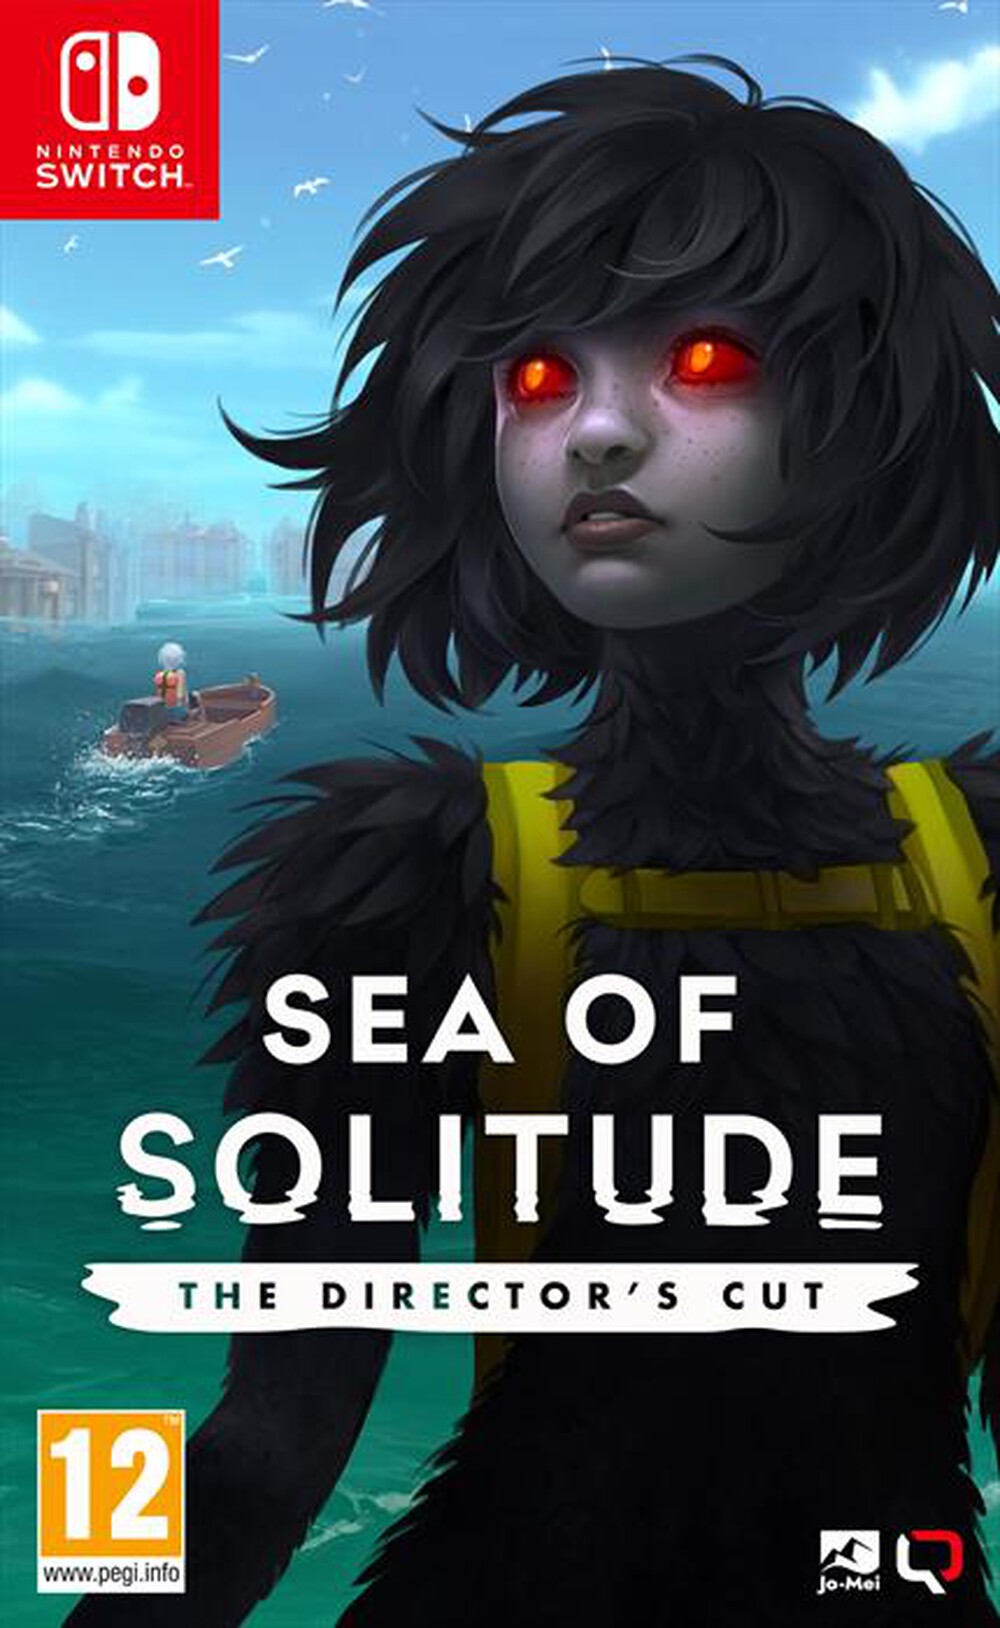 "QUANTIC DREAM - SEA OF SOLITUDE: THE DIRECTOR'S CUT SWT"